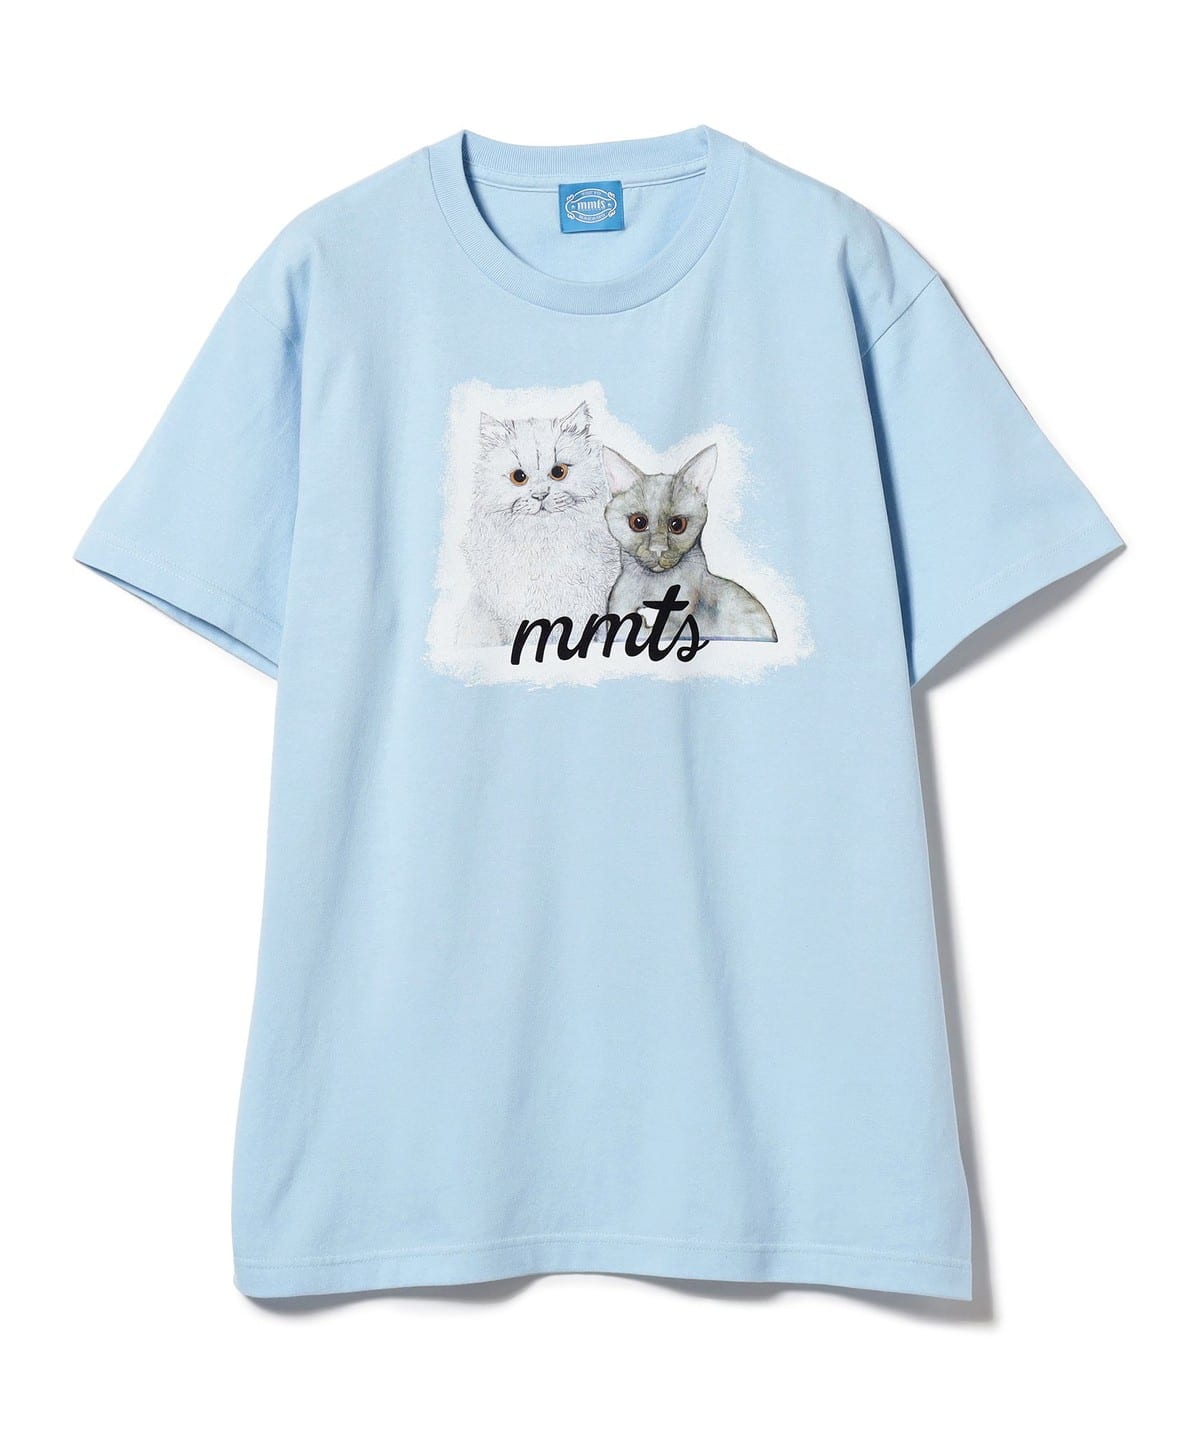 mmts（マミタス）〈UNISEX〉mmts / 猫絵画 Tシャツ（Tシャツ 